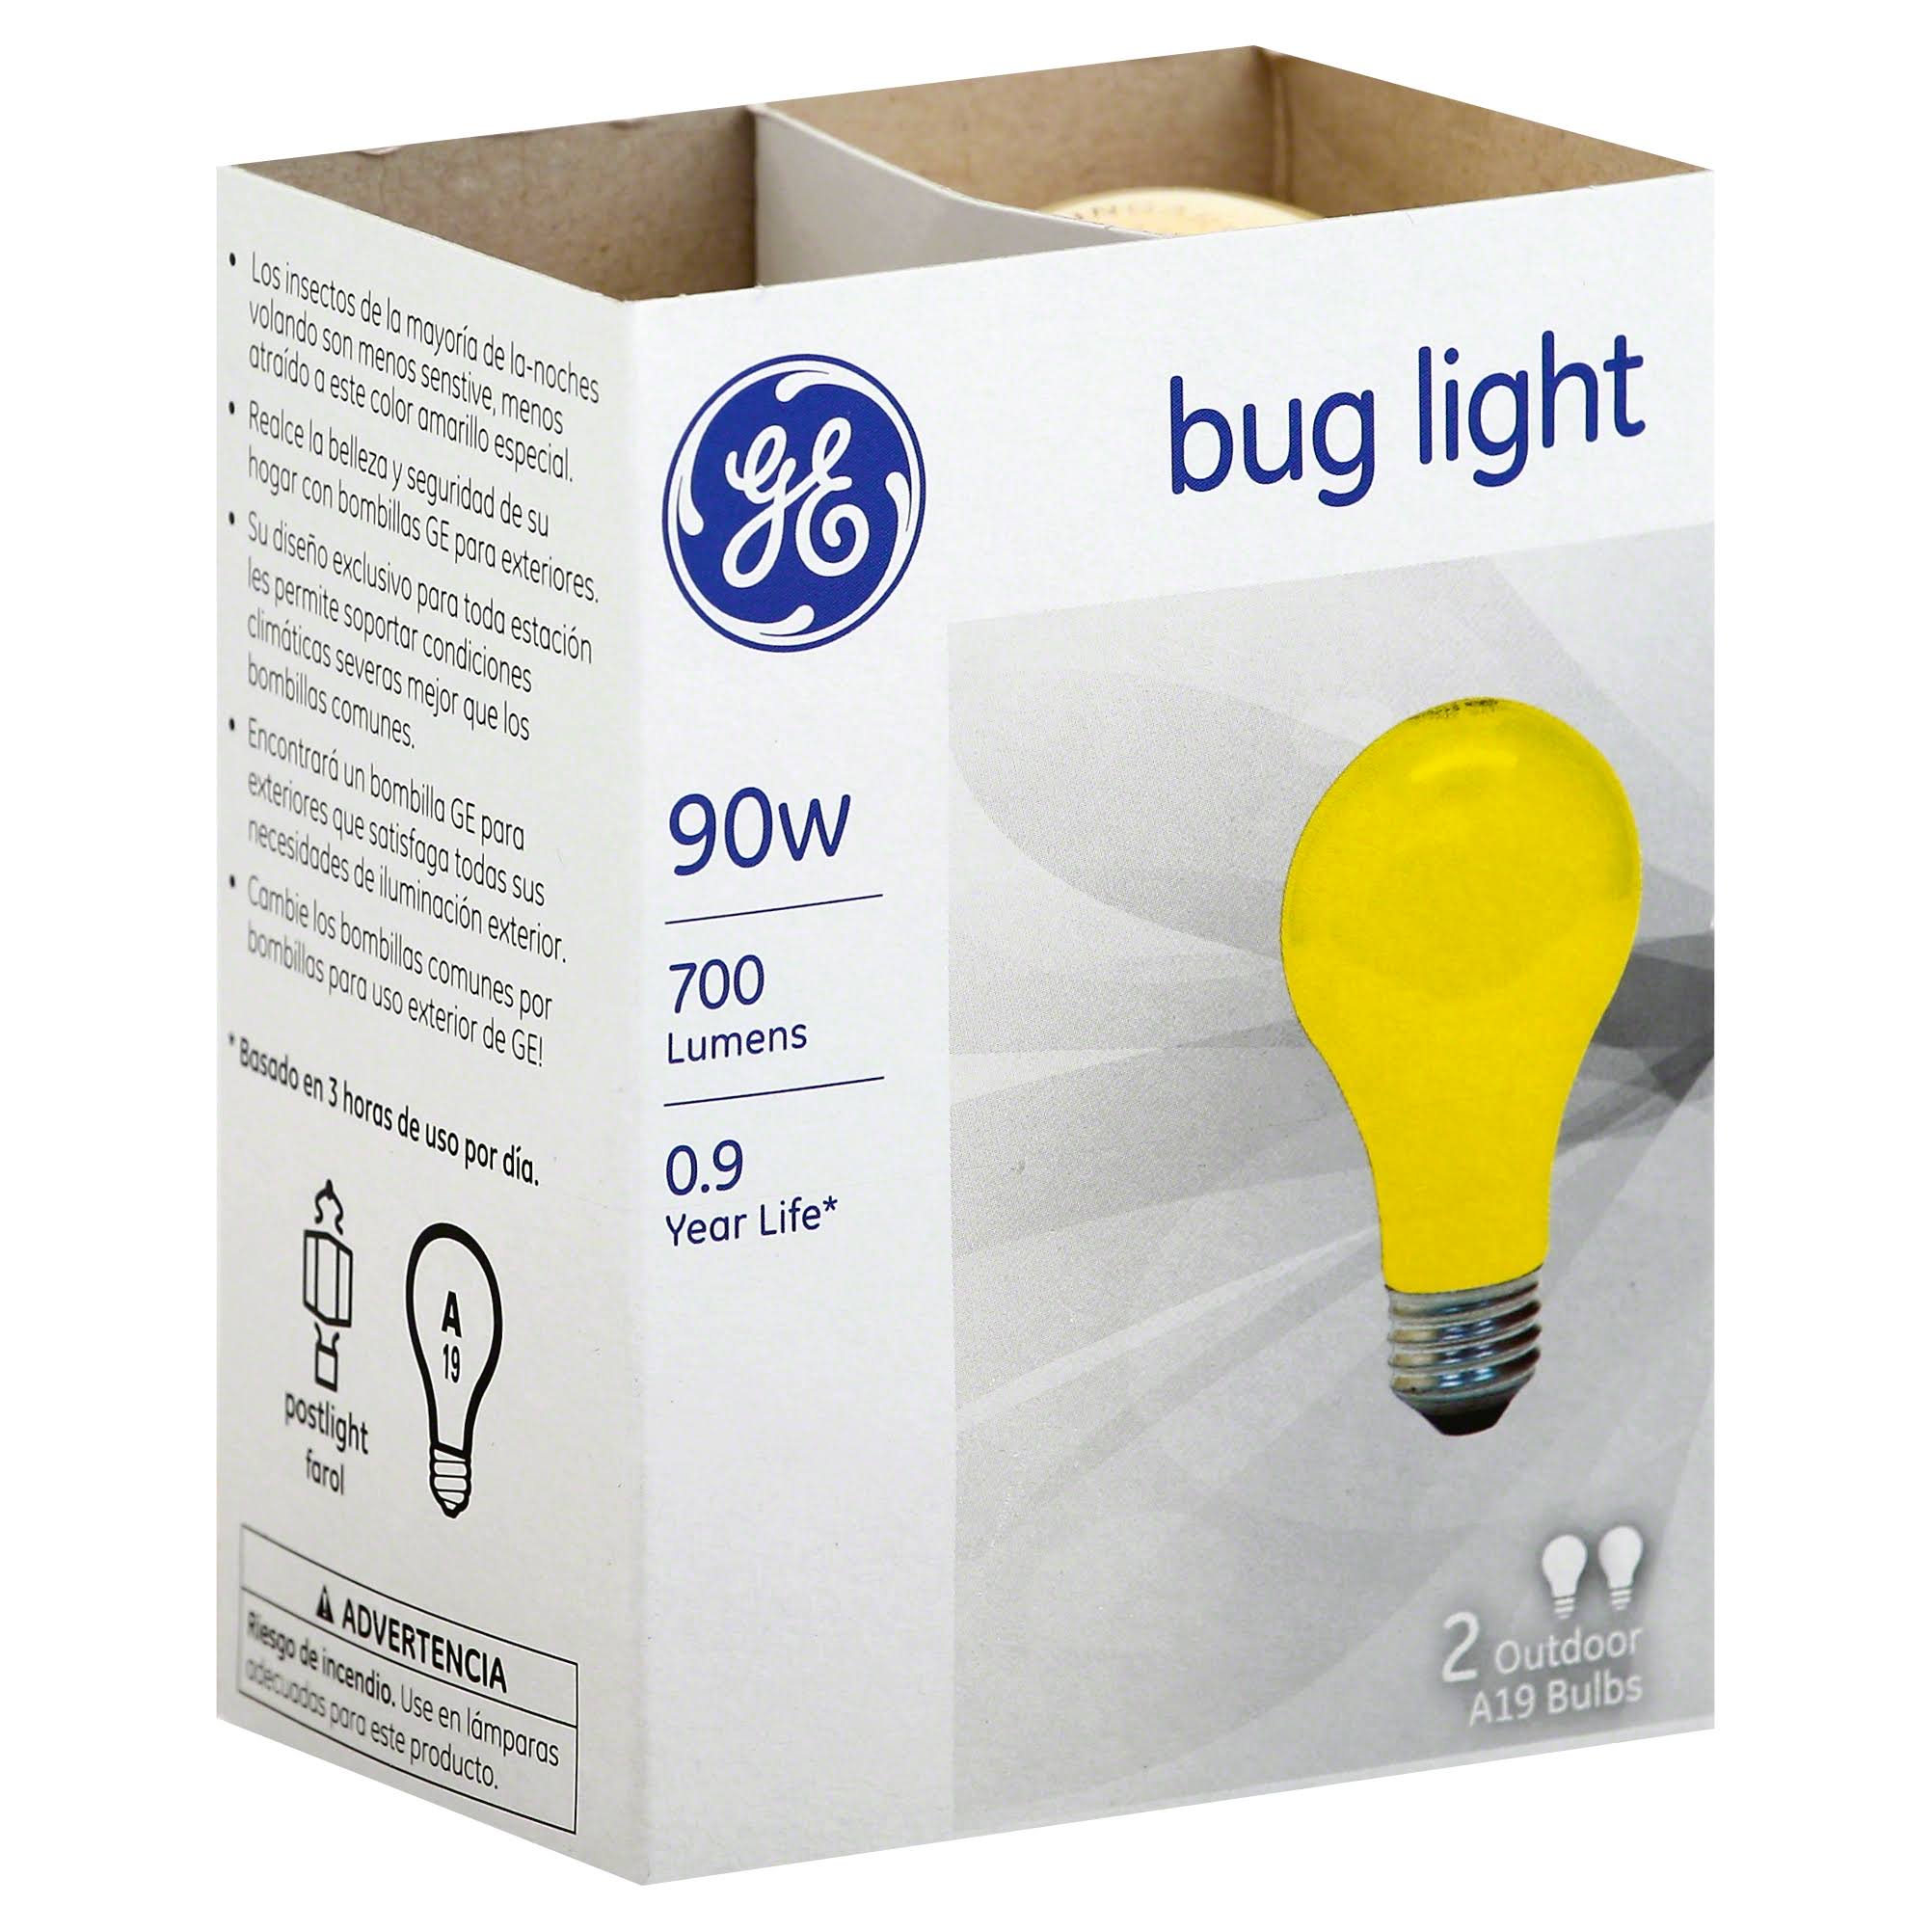 GE bug light Bulb - 90W, 2pc